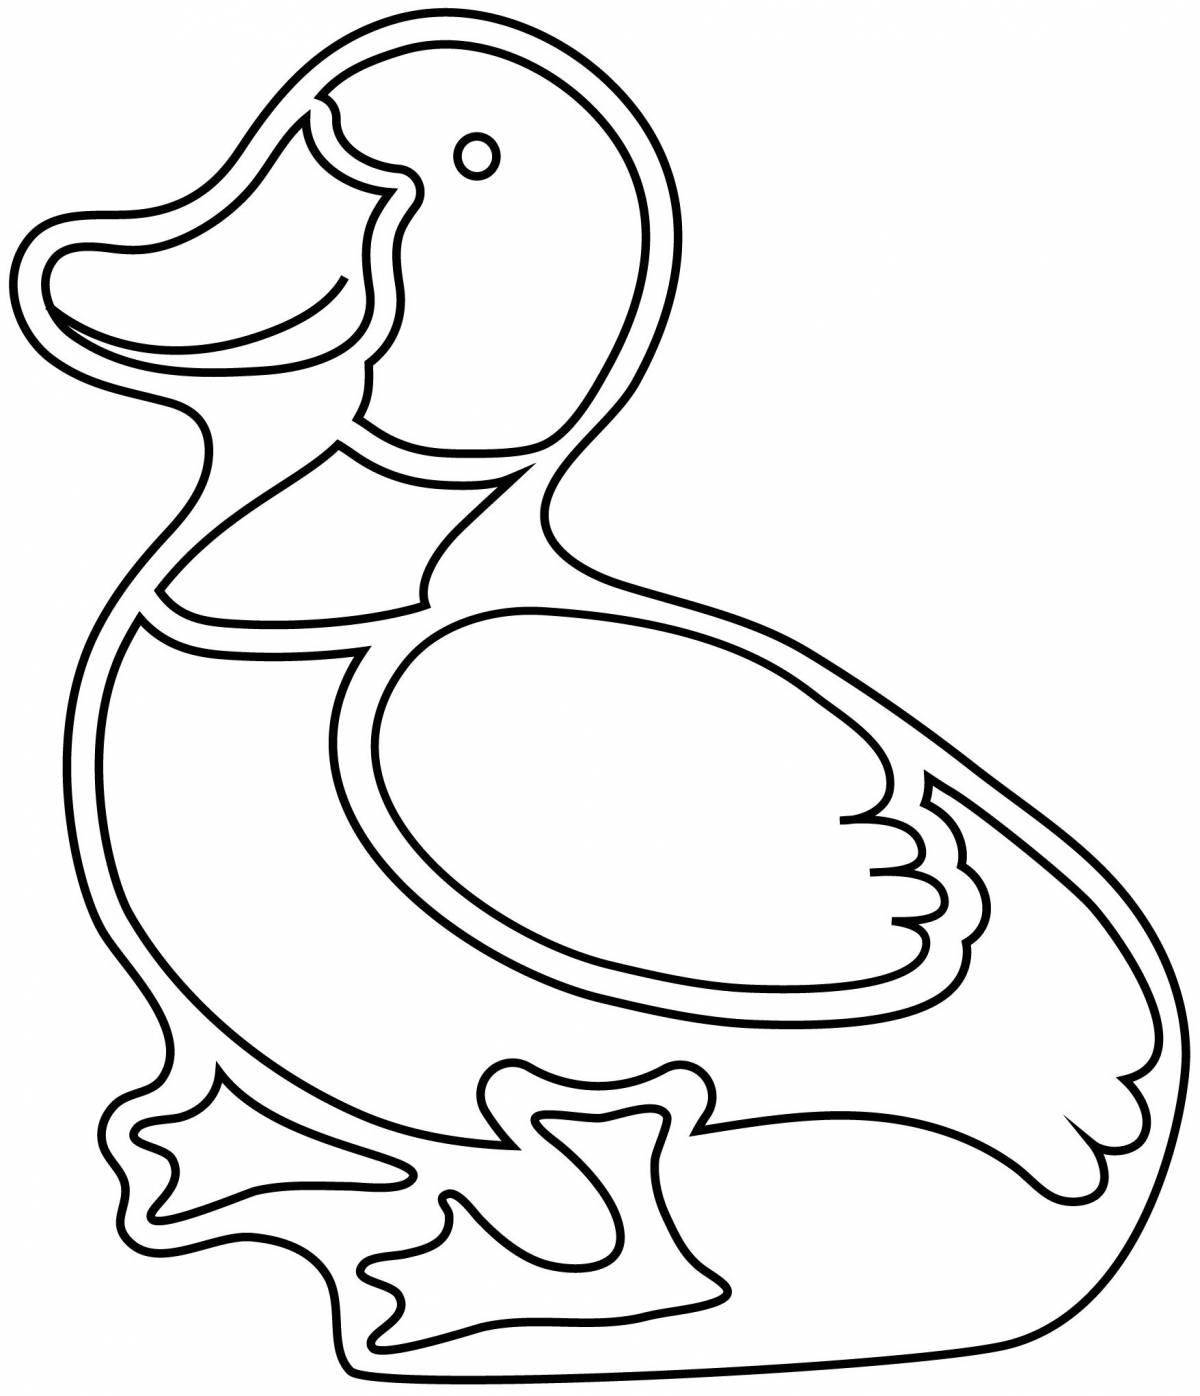 Coloring page elegant lalafoe duck